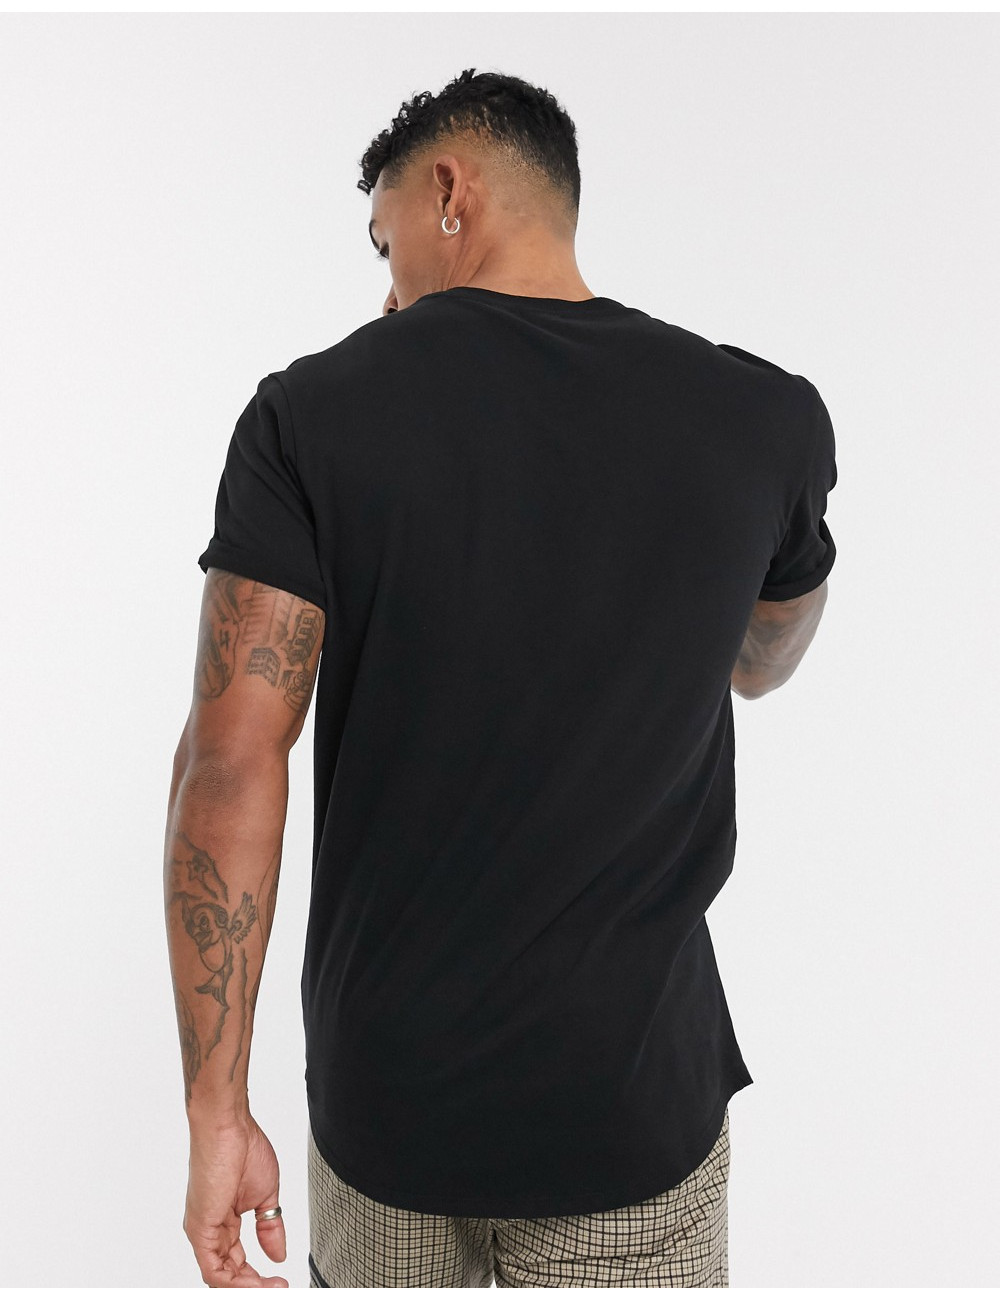 G-Star Lash t-shirt in black